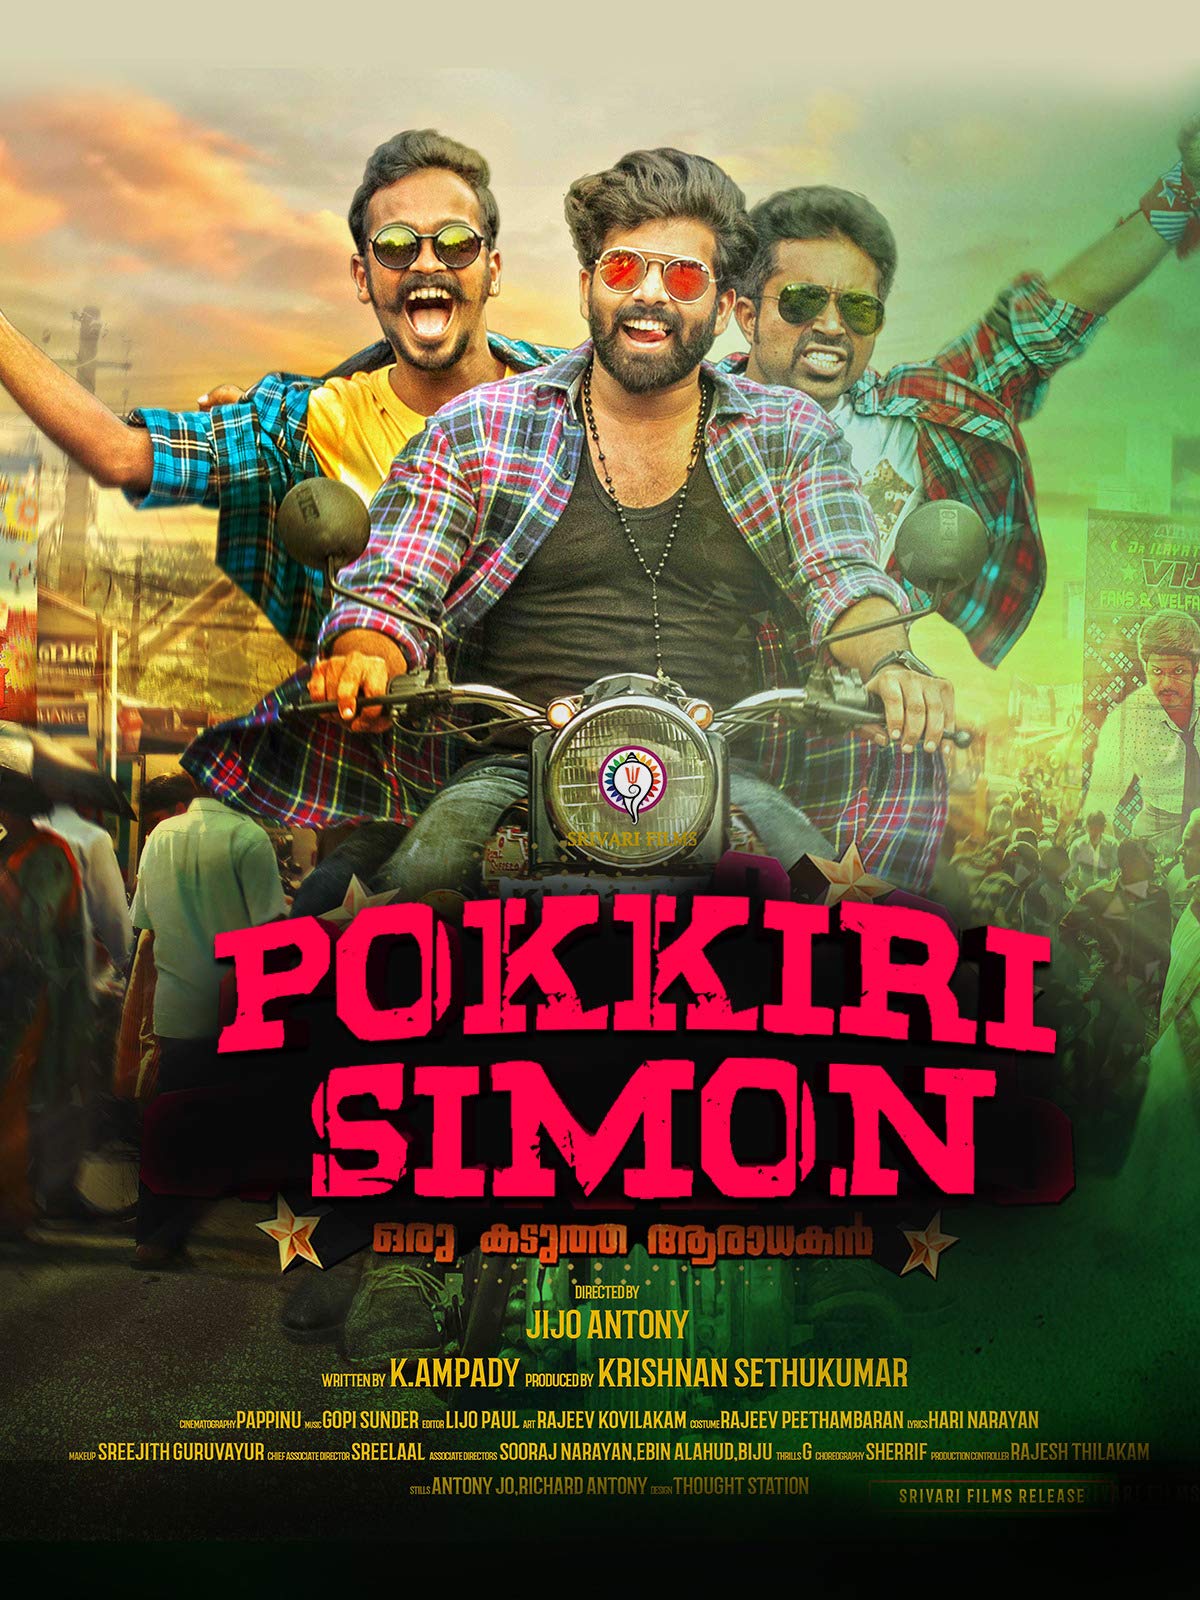 Pokkiri Rasigan (2022) is tamil comedy film directed by Jijo Antony